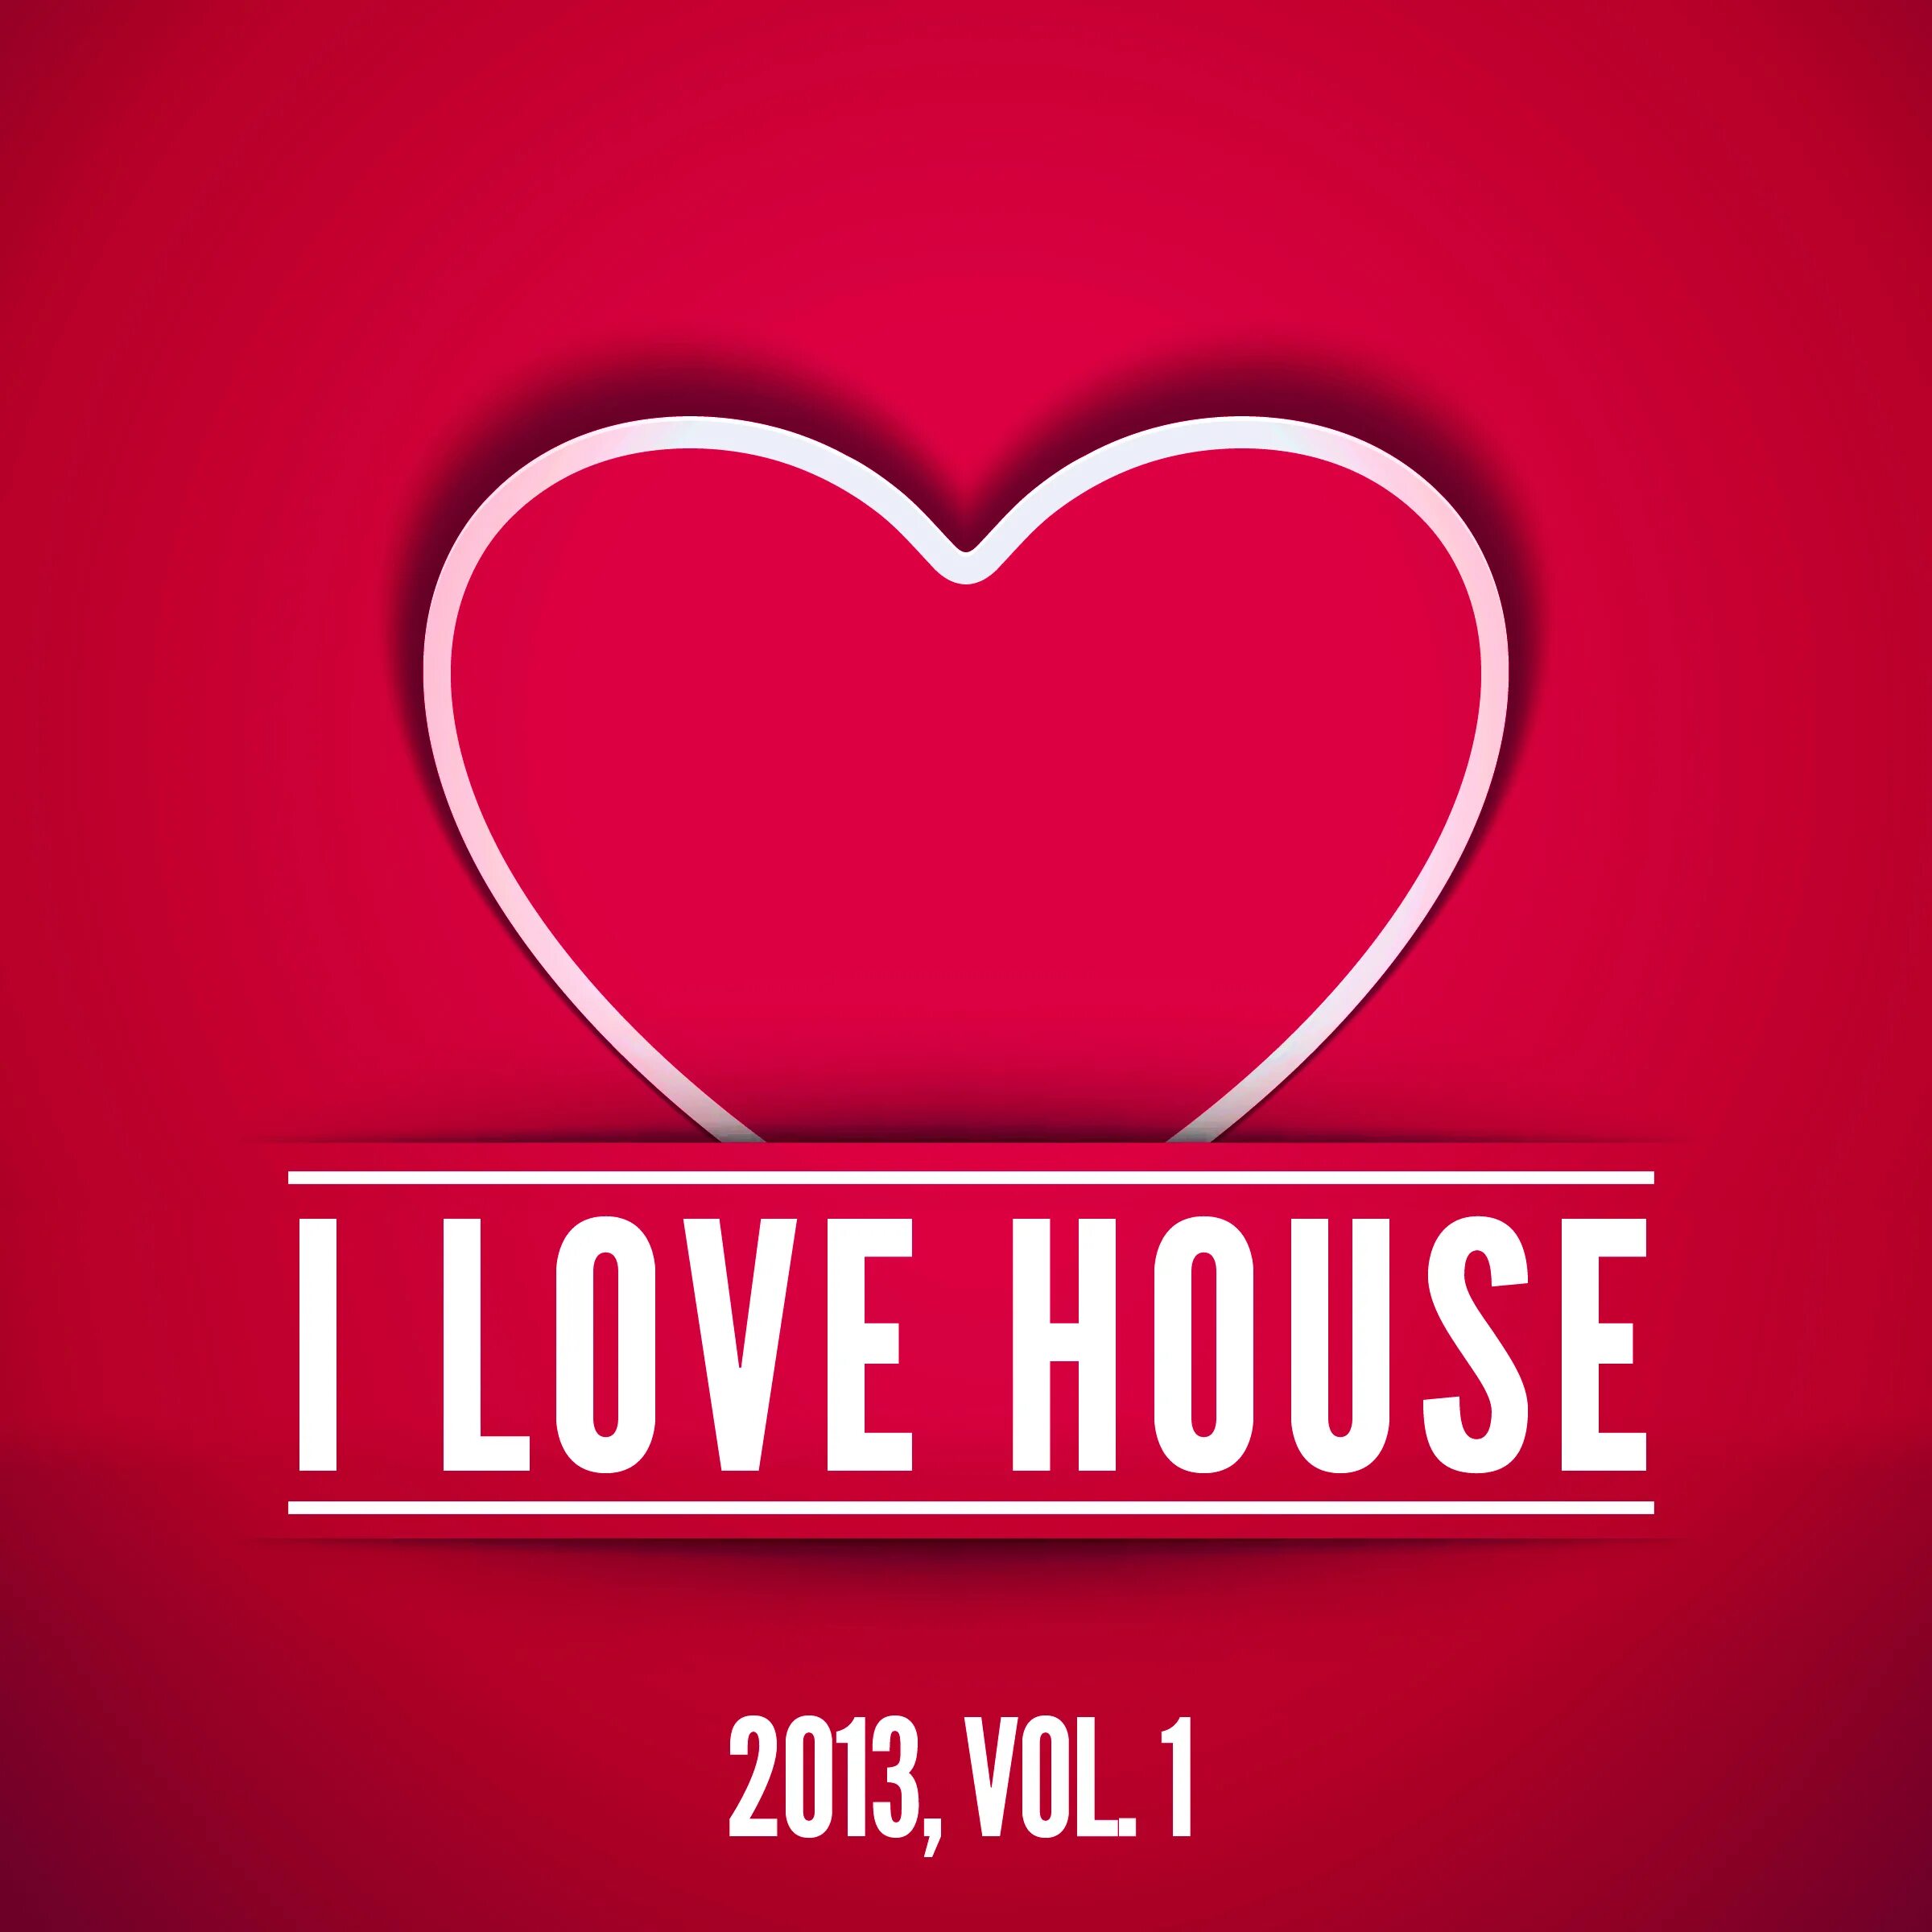 1 love 1 house